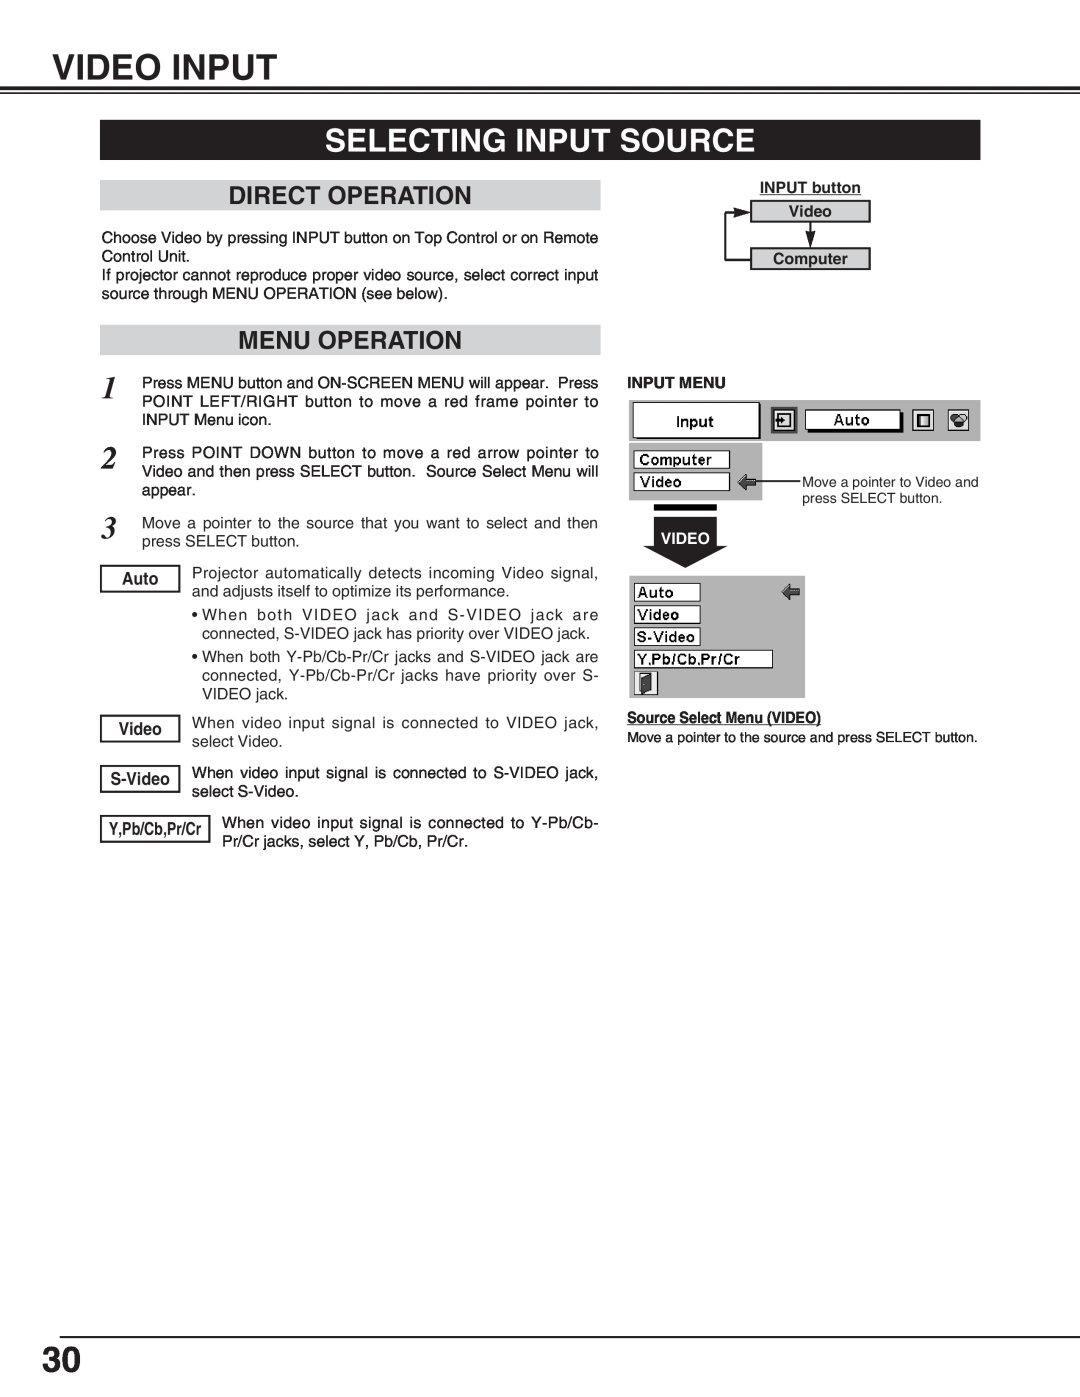 BOXLIGHT cp-16t manual Video Input, Selecting Input Source, Direct Operation, Menu Operation, INPUT button Video Computer 